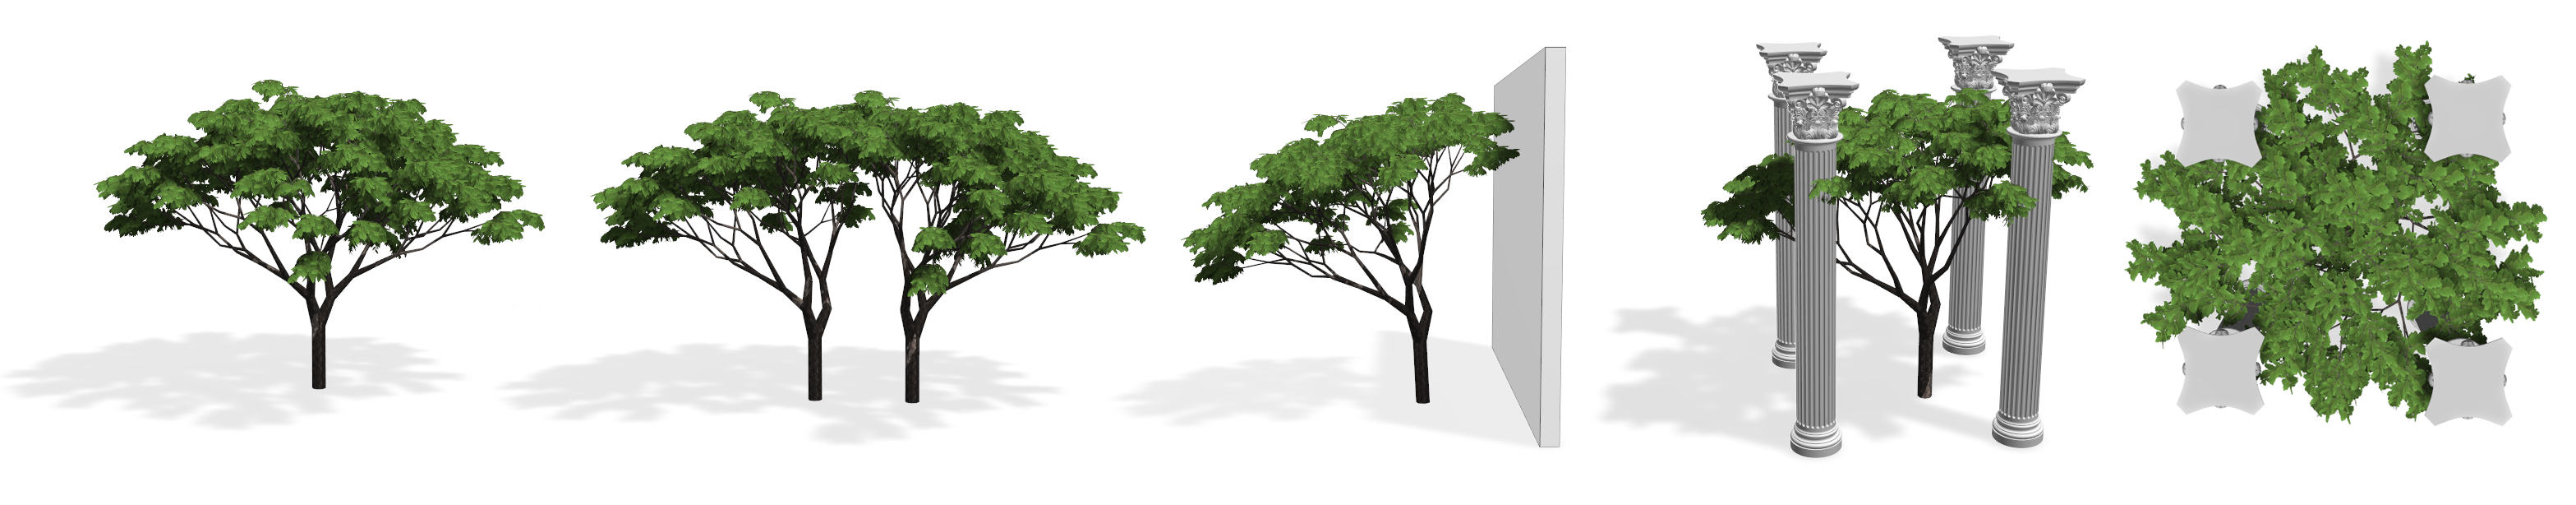 Teaser of Plastic Trees: Interactive Self-adapting Botanical Tree Models